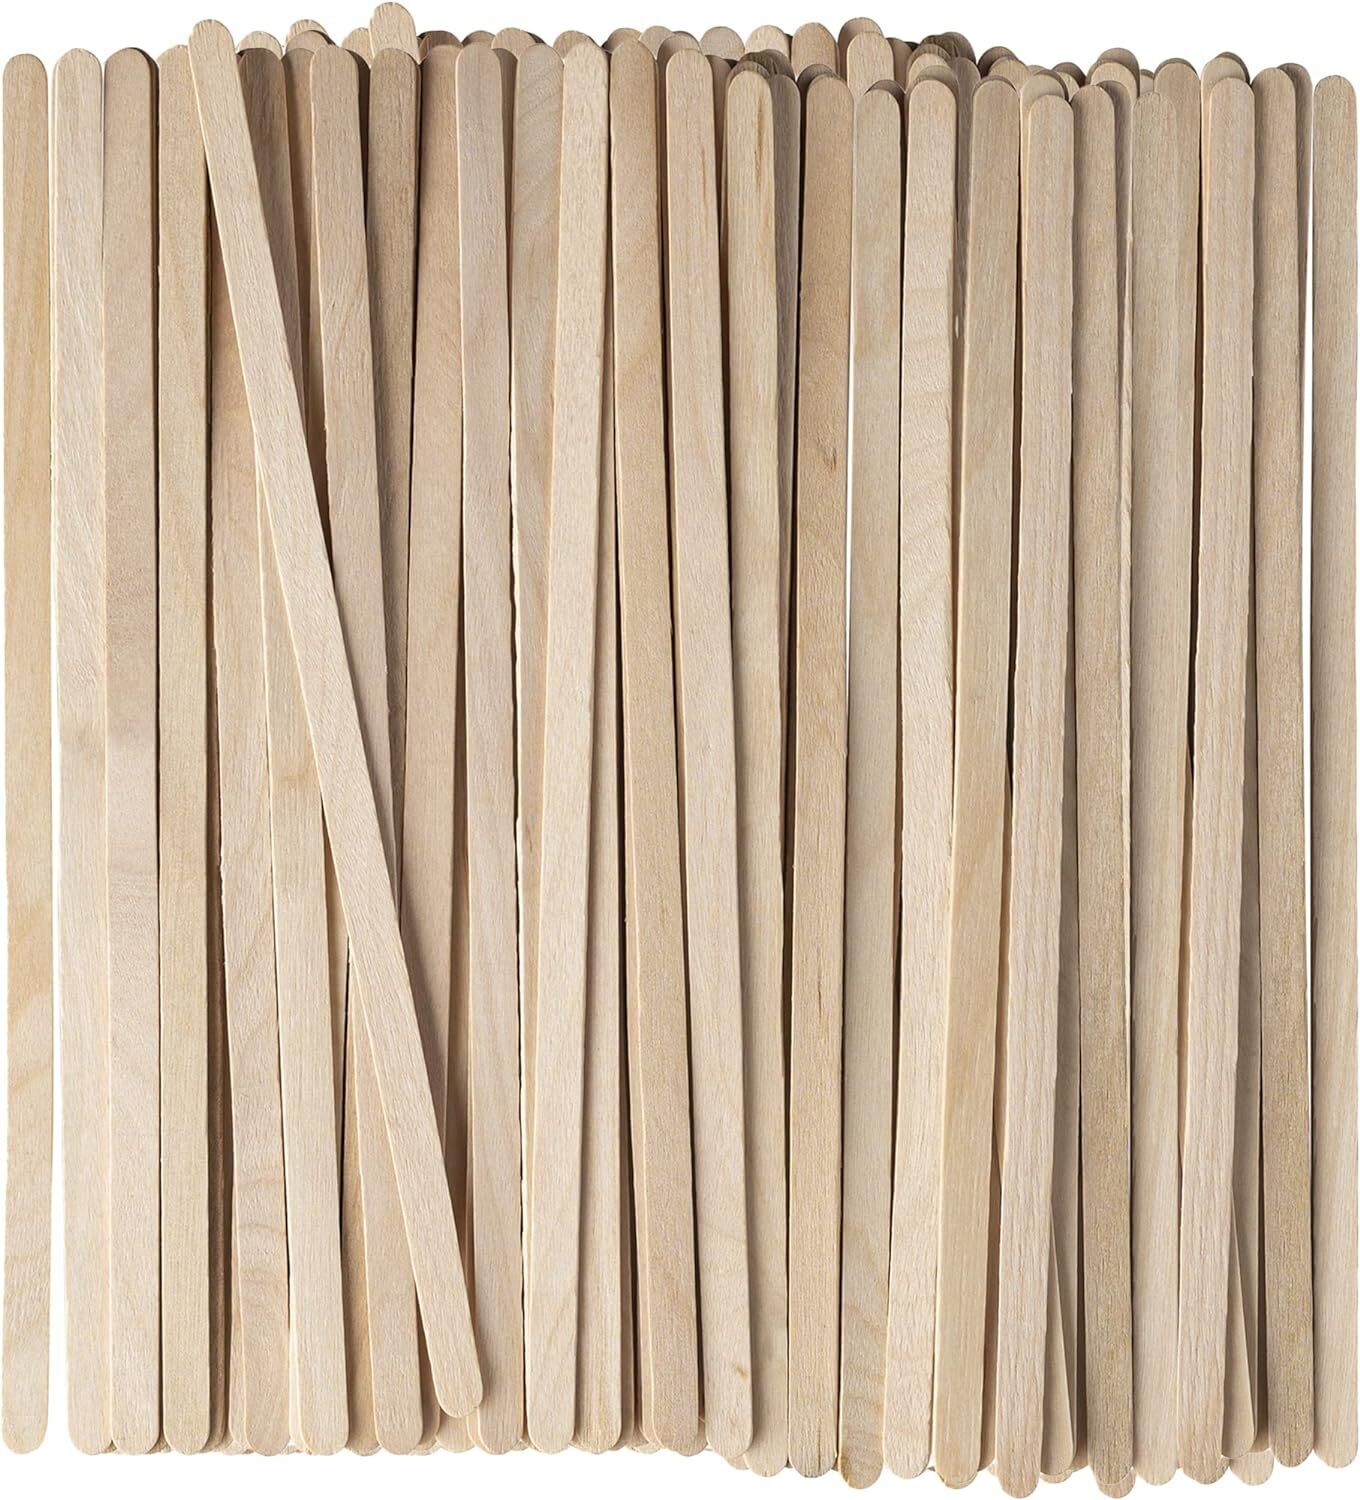 500/1000 Count 7.5 Inch Wooden Coffee Stirrers - Wood Stir Sticks